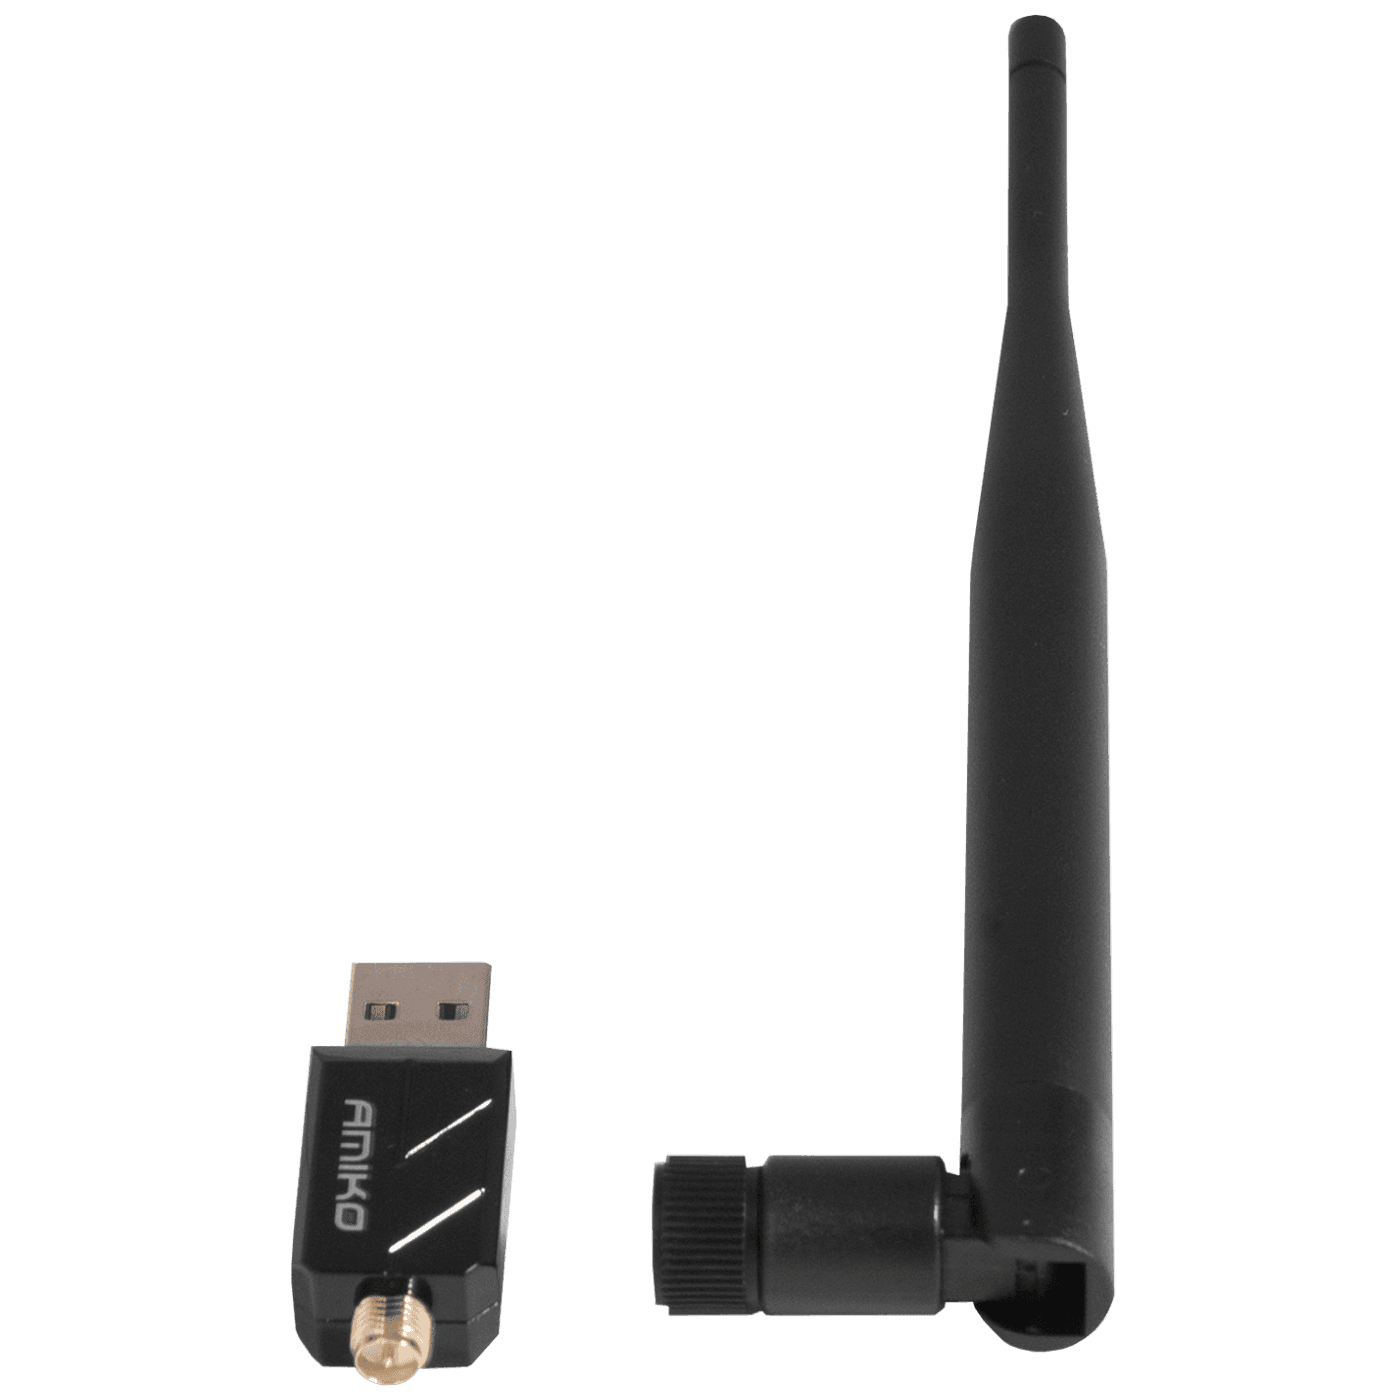 AMIKO Wi-Fi mrežna kartica, USB, 2.4 GHz, 5 dB, 150 Mbps, Crna